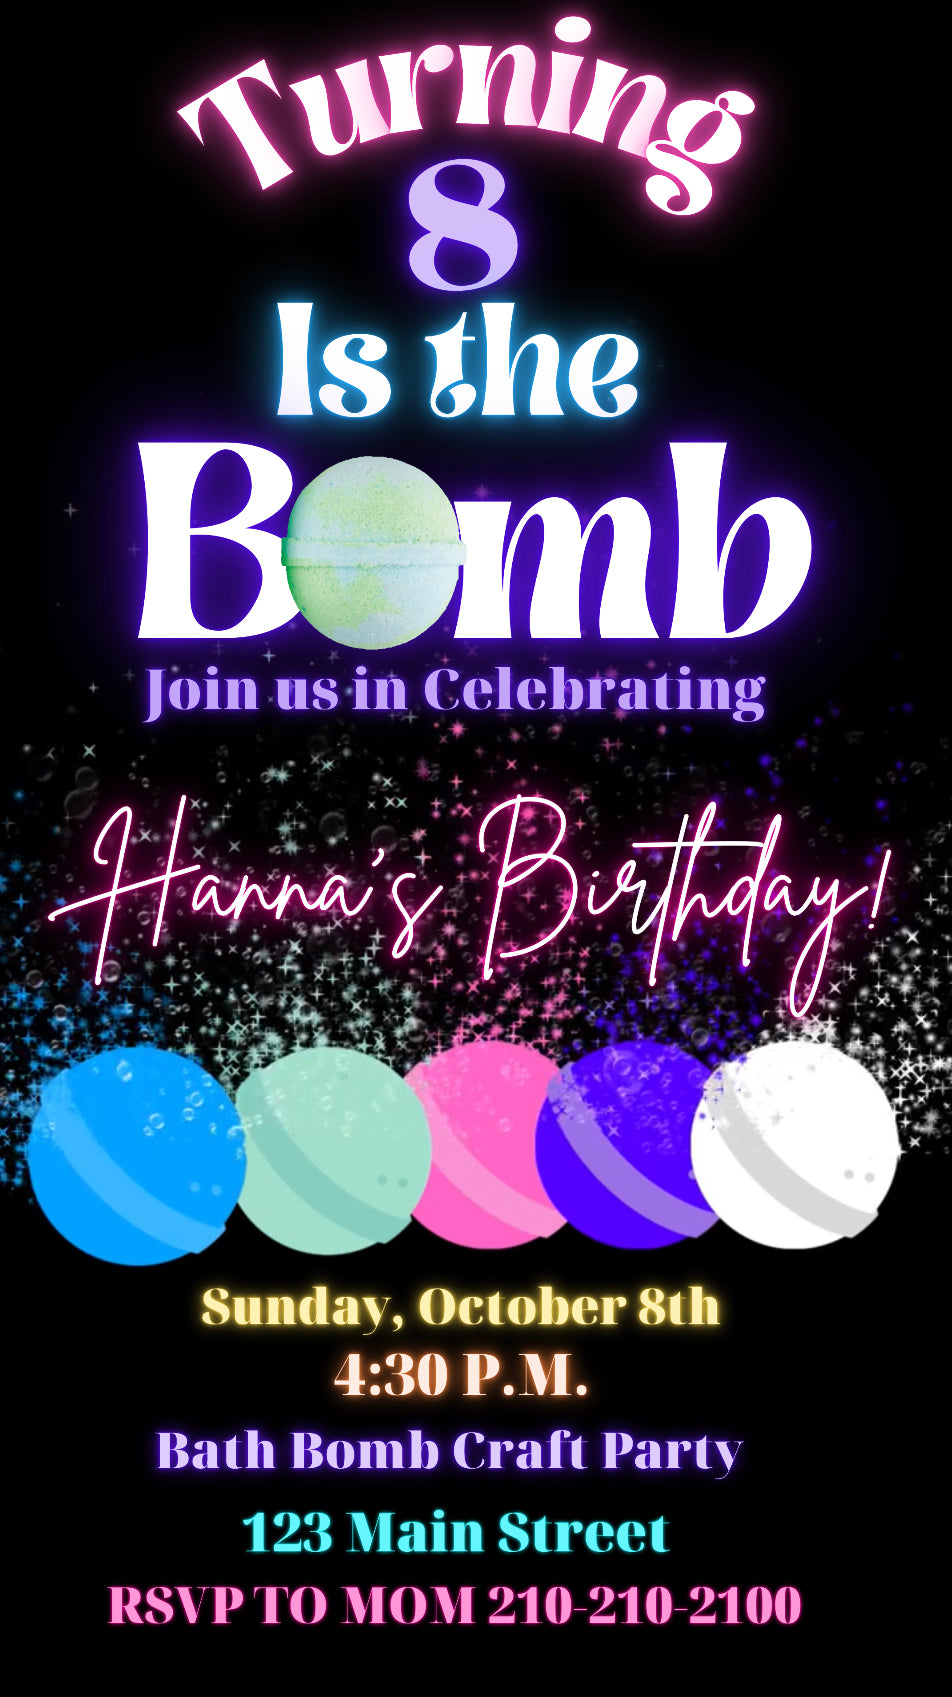 Bath Bomb Party Video invitation, Bath Soap Girls birthday invitation